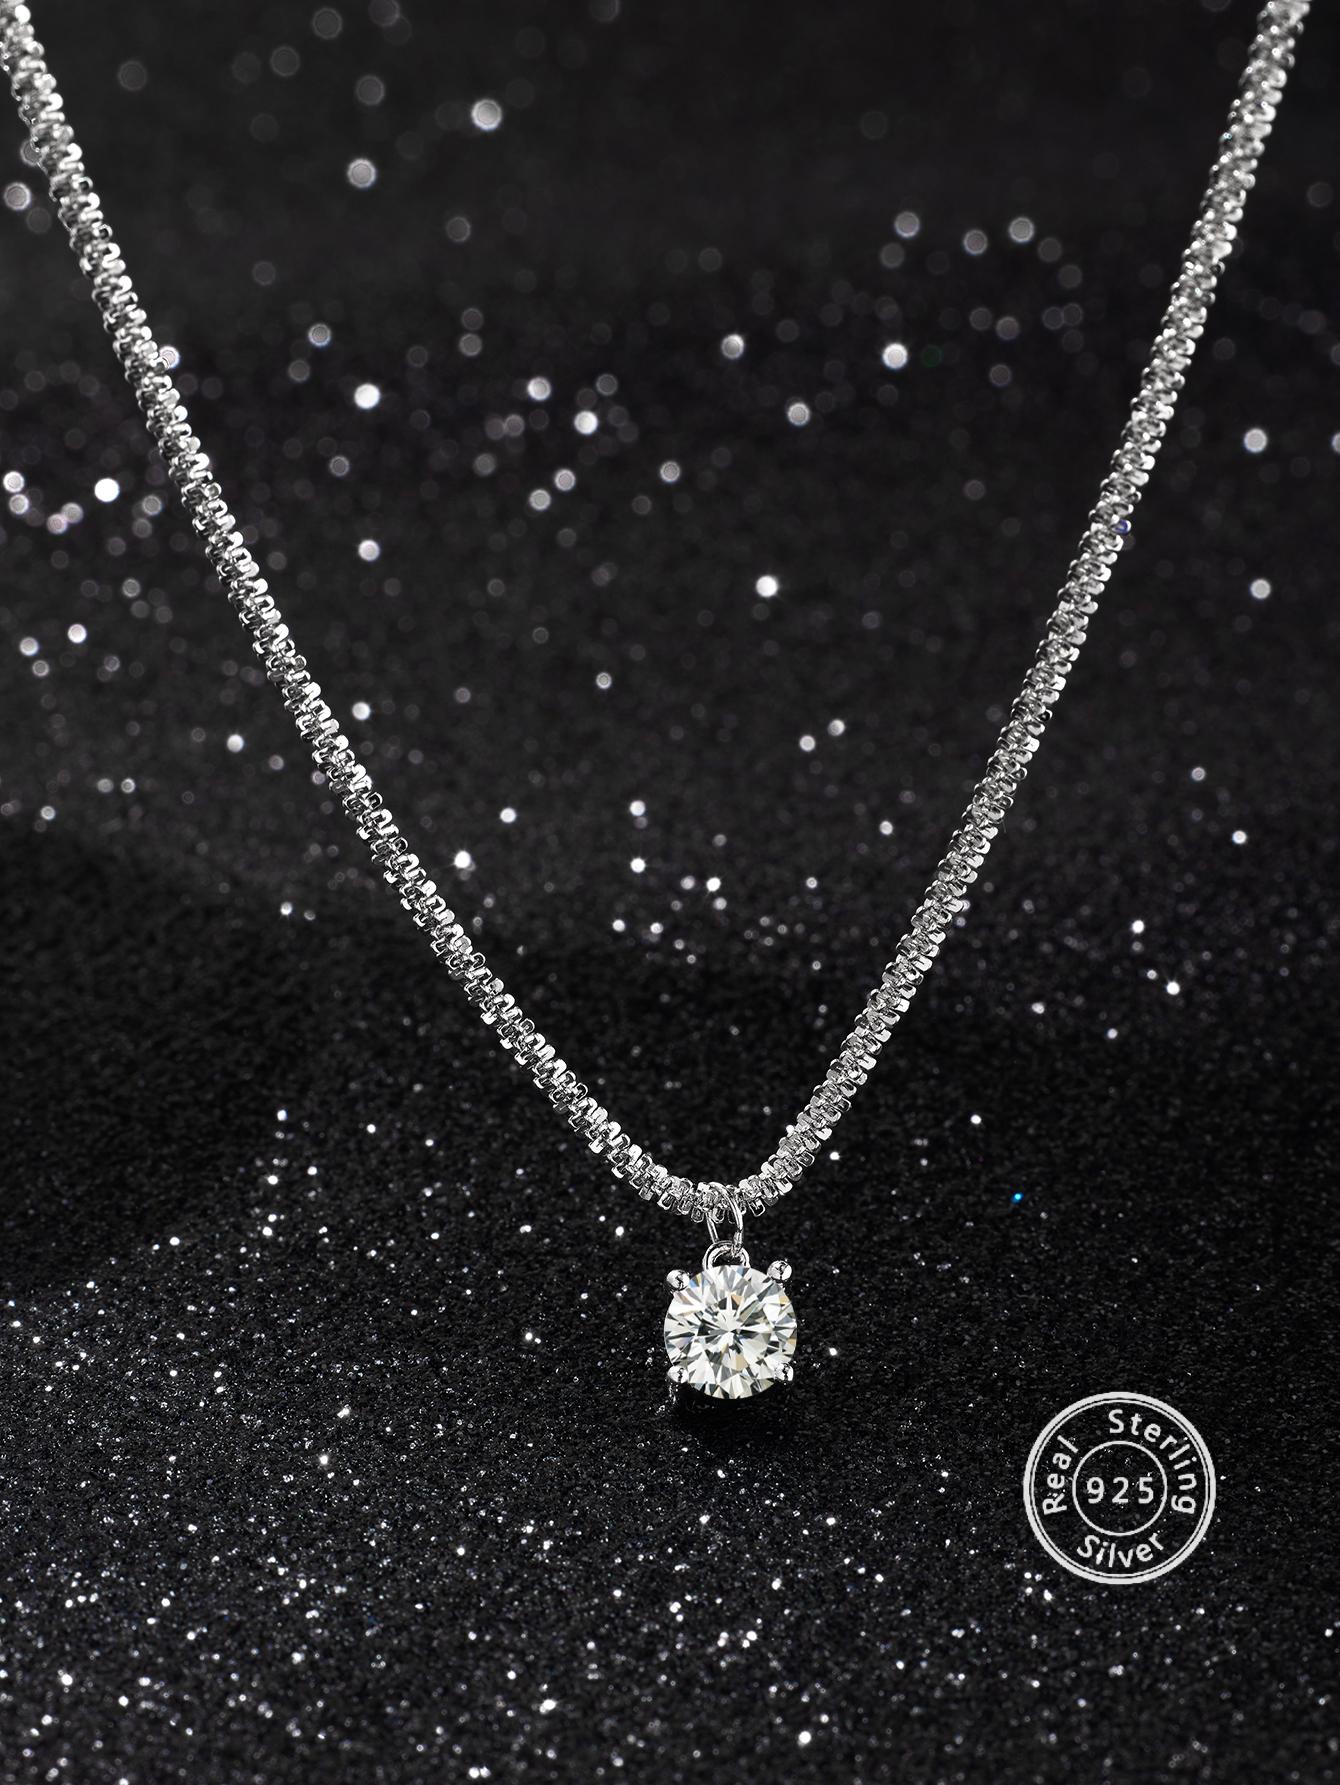 Glamorous Silver Cubic Zirconia Pendant Necklace: An Elegant Decoration for Women